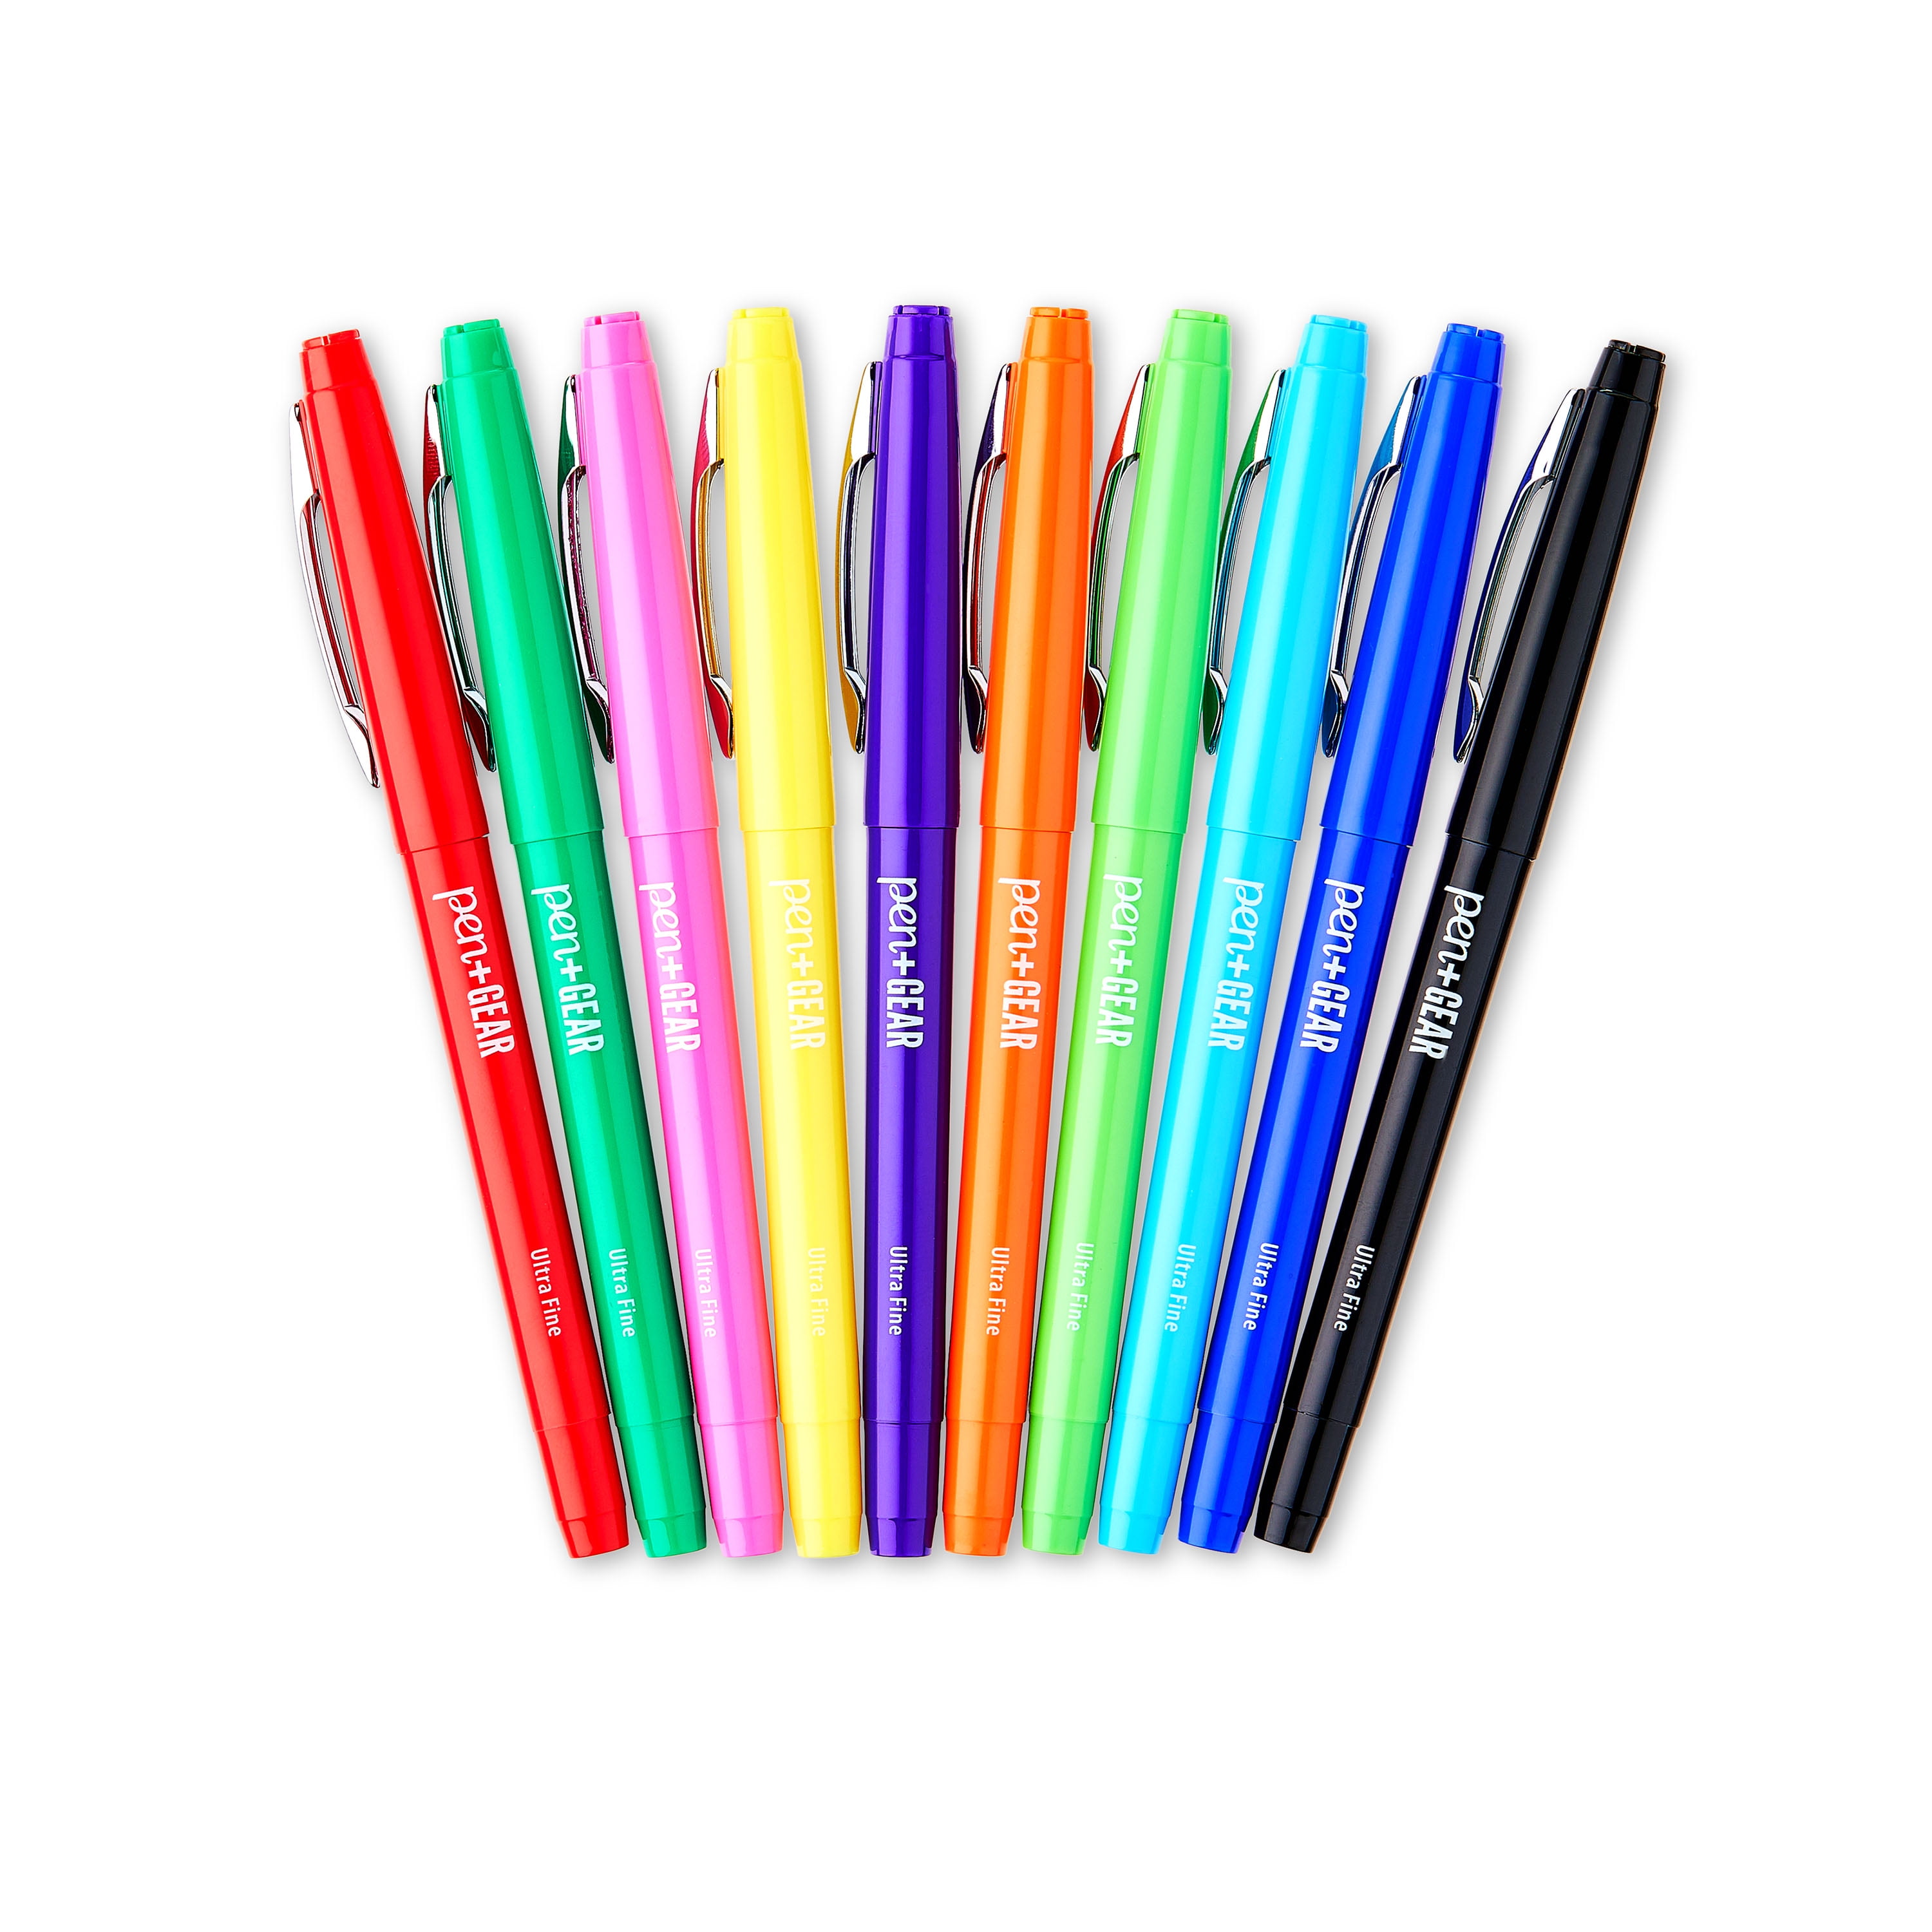 Best fine tip pens - 5 top Rated Color Sets Reviewed 